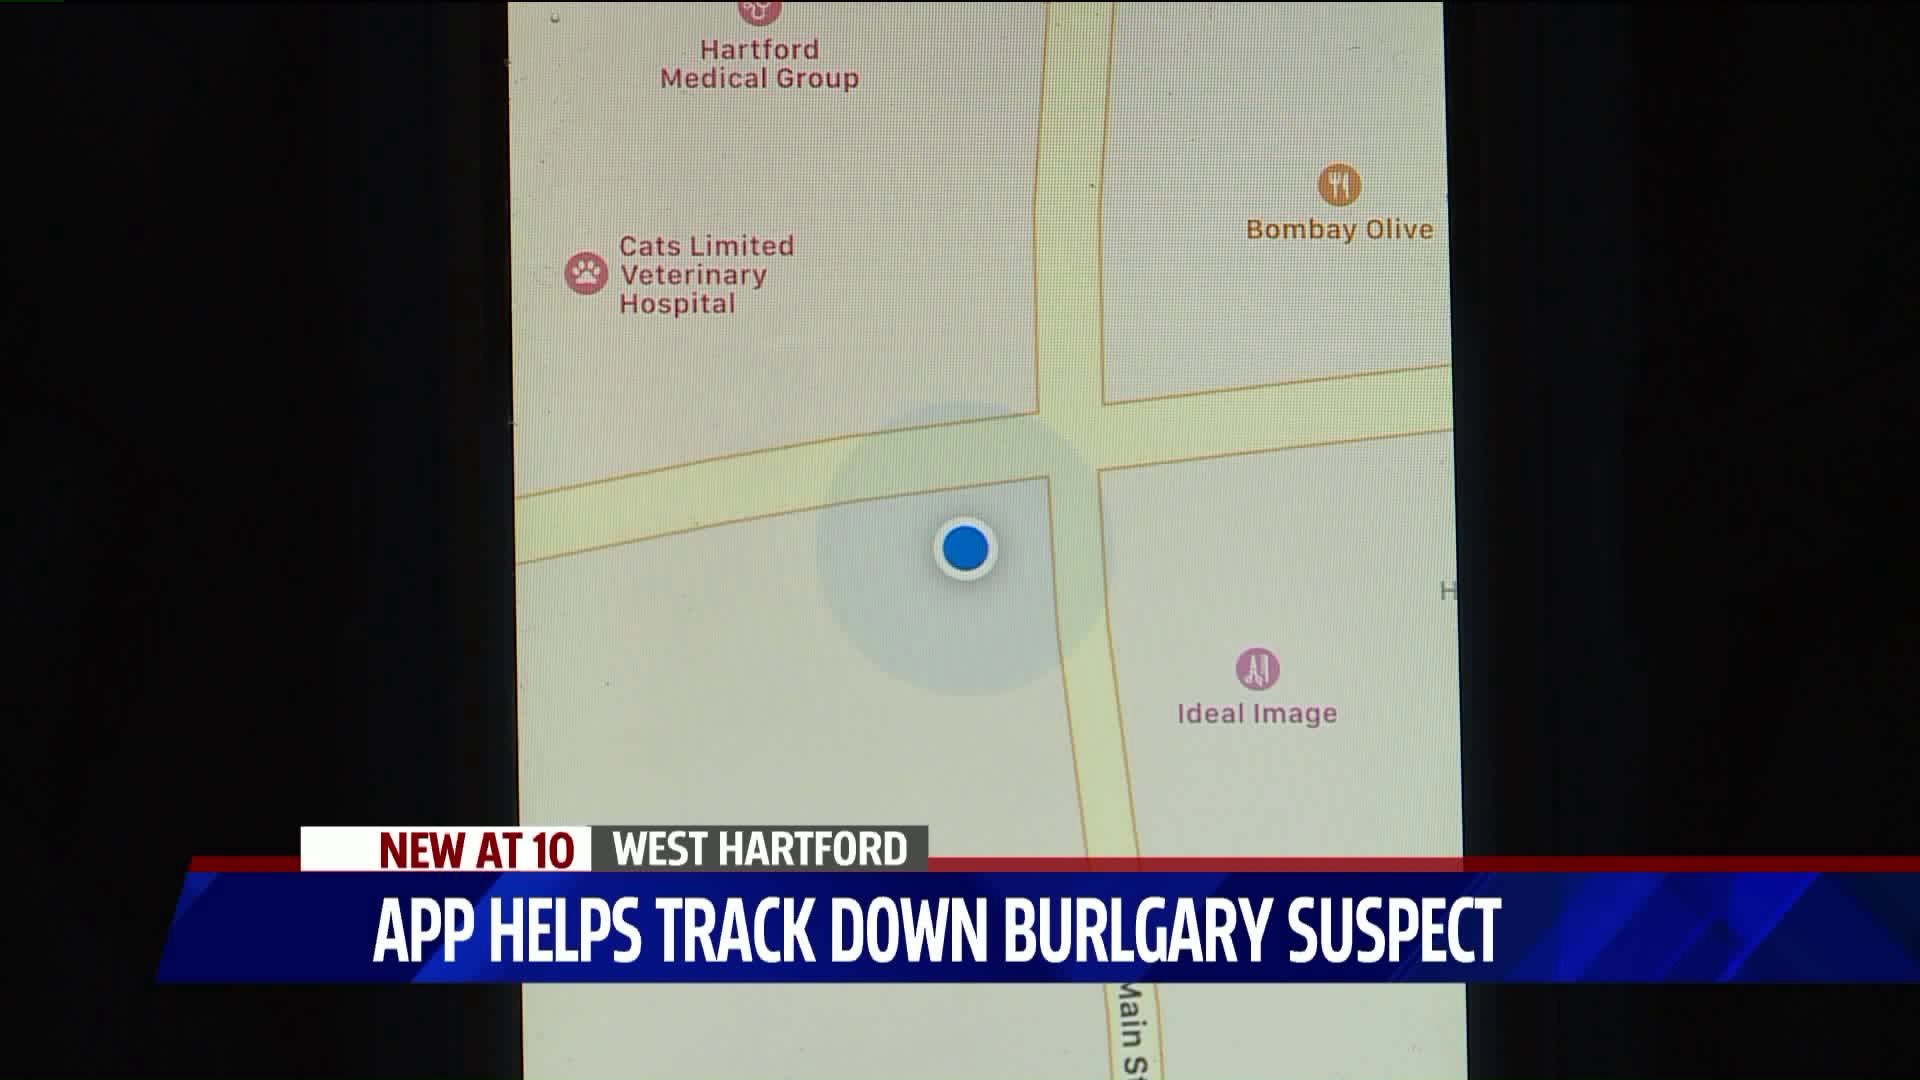 App helps track down burglary suspect